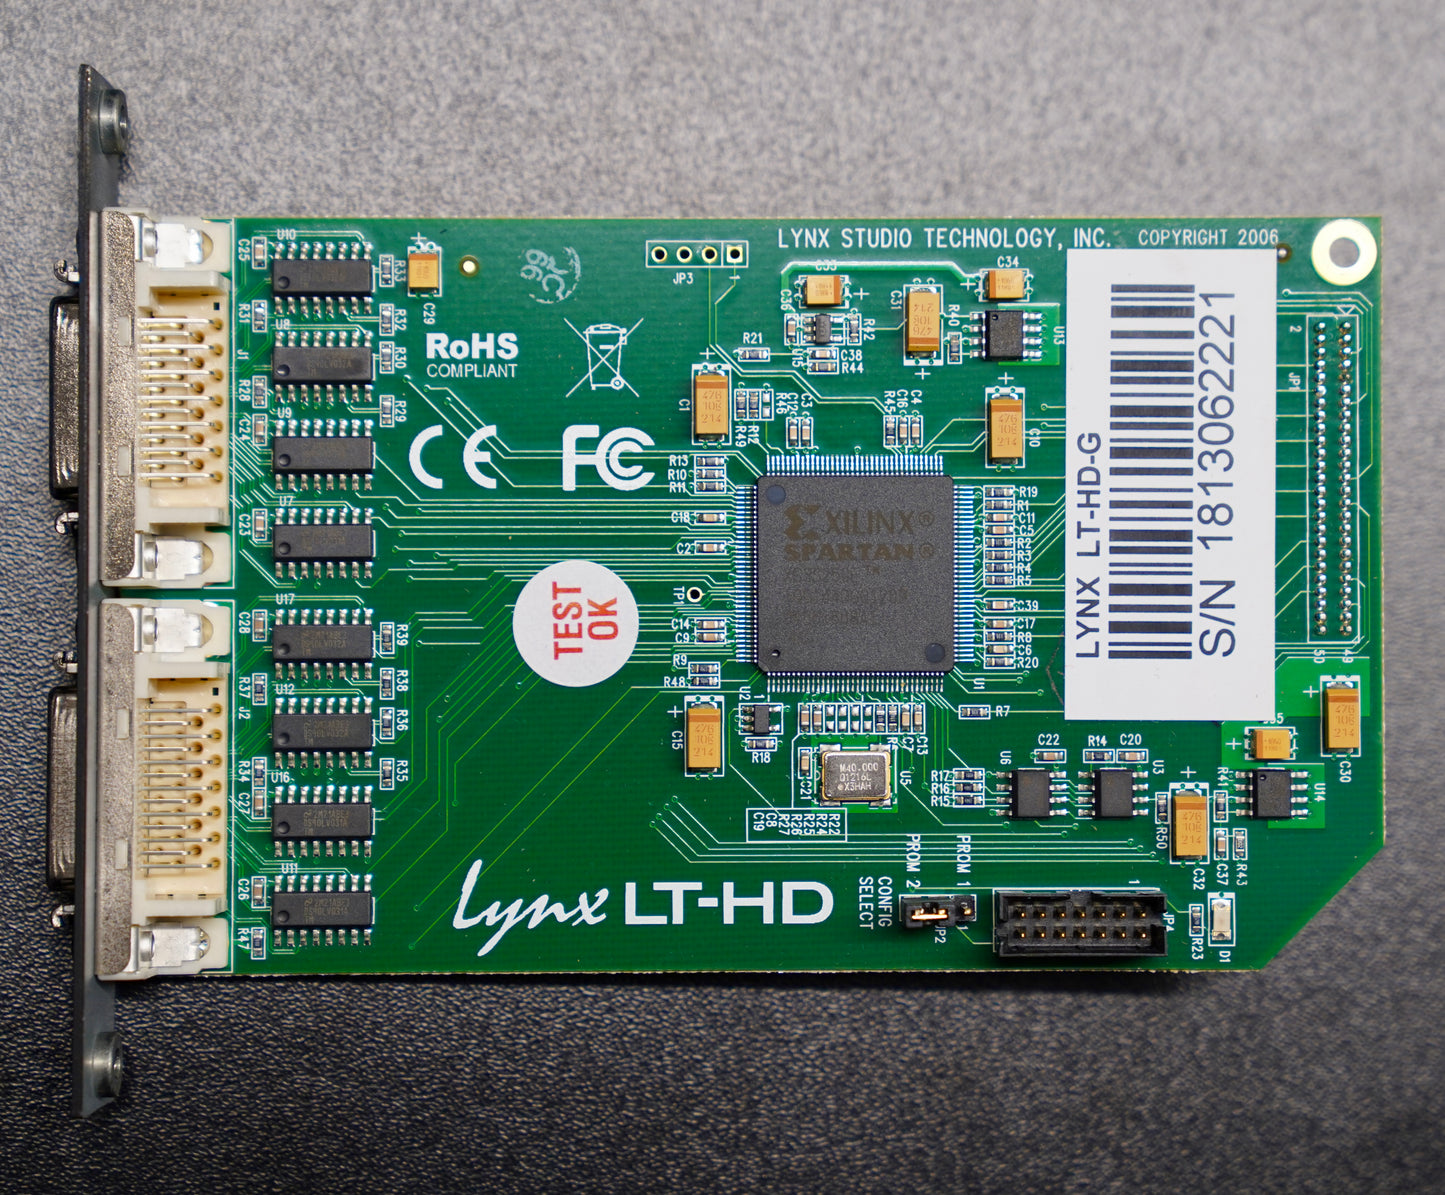 Lynx LT-HD Pro Tools Expansion Card